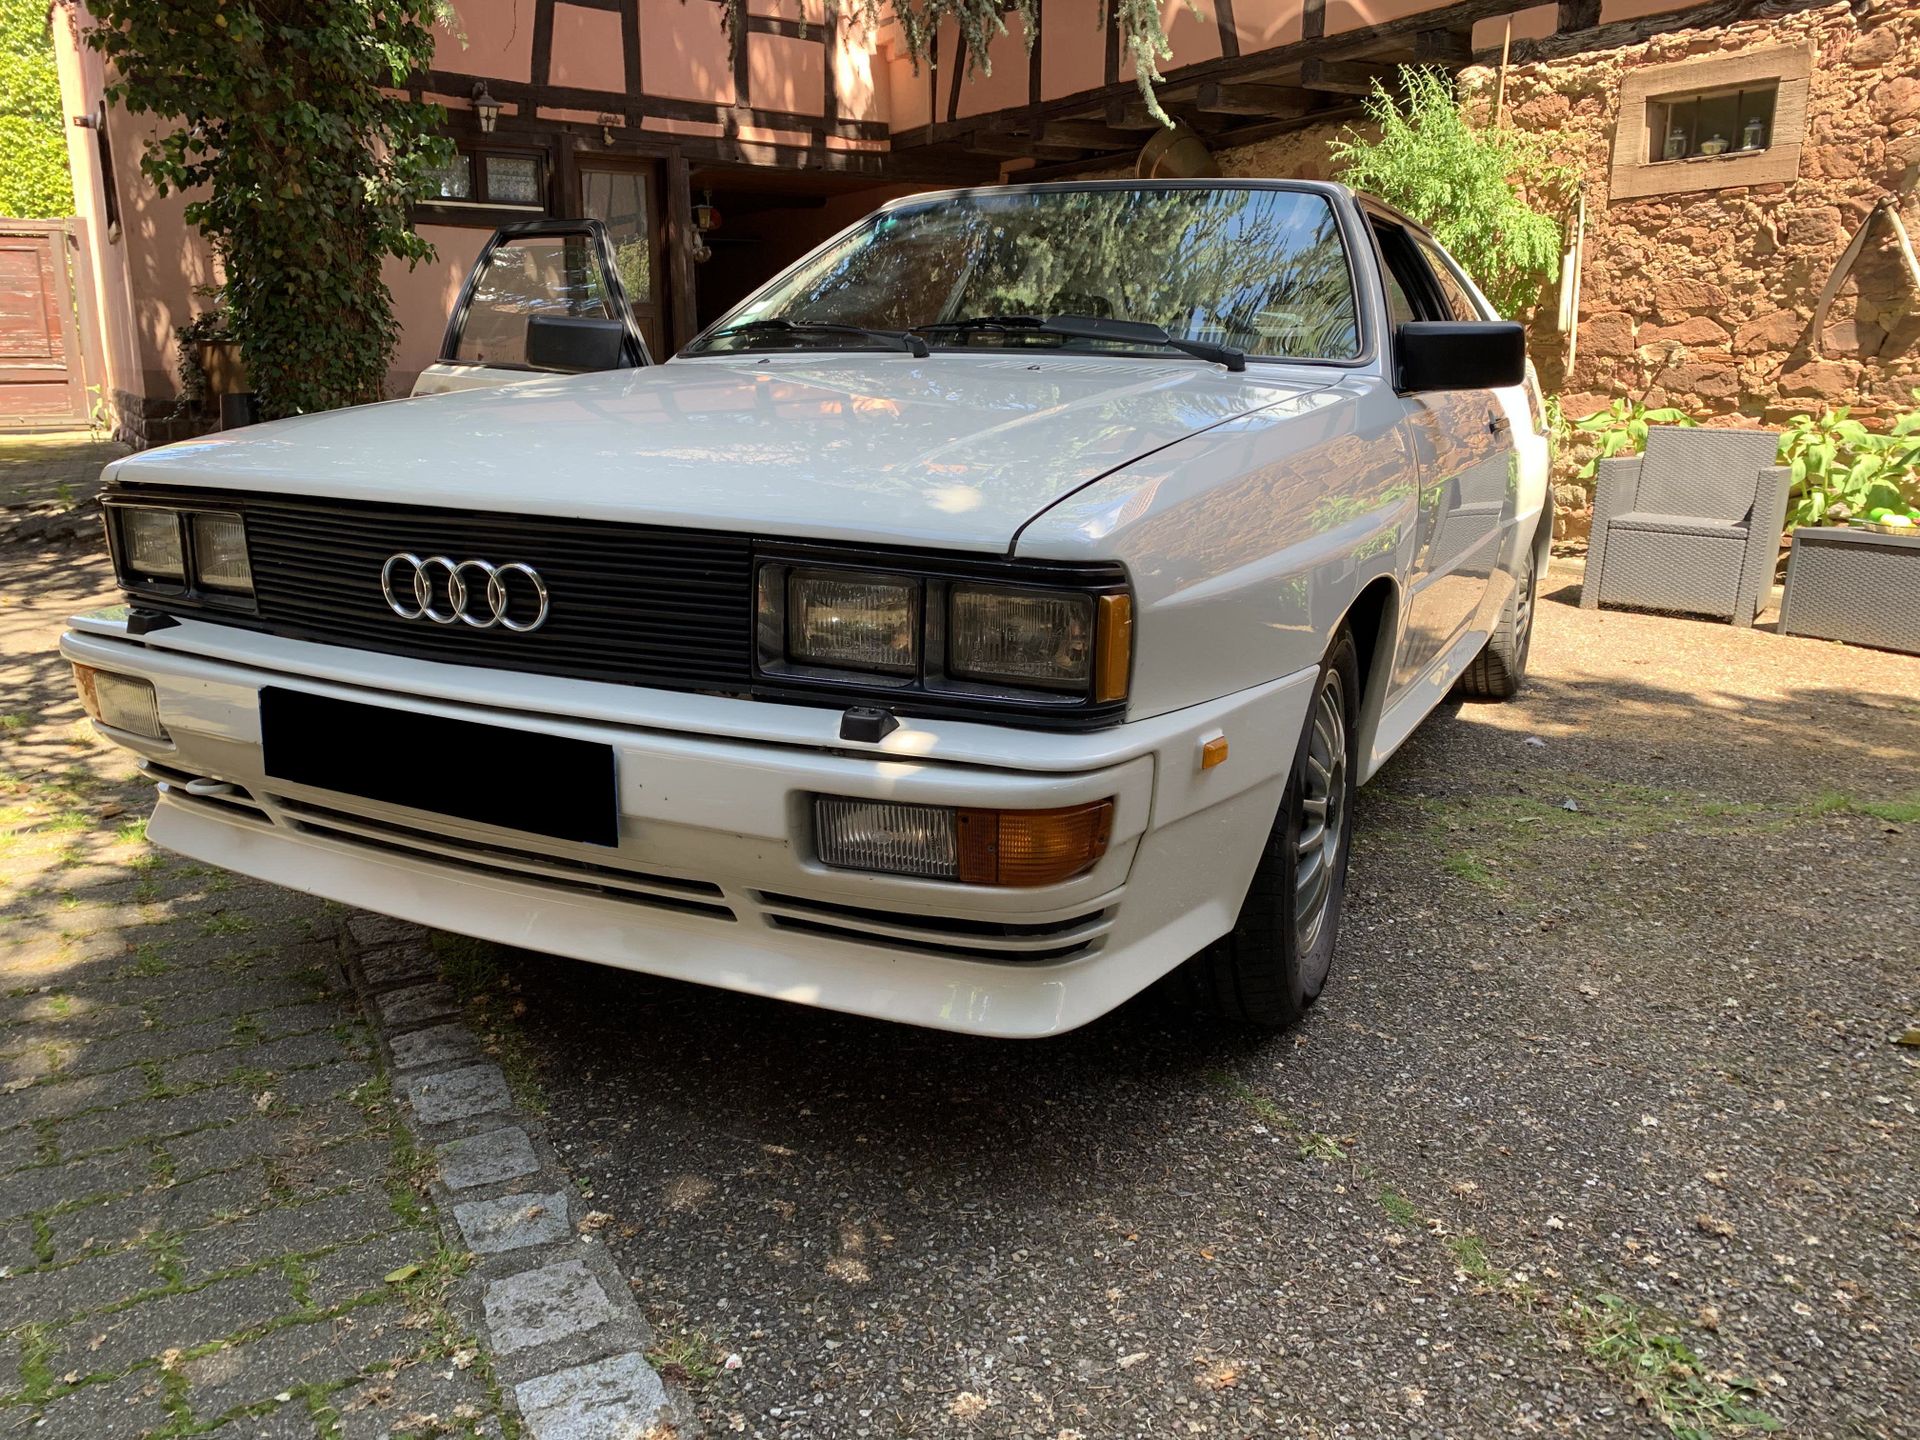 1982 Audi Quattro 序列号: WAUZZZ85ZCA901202

一个汽车神话

收藏家的登记

139904原始公里数

CT OK

19&hellip;